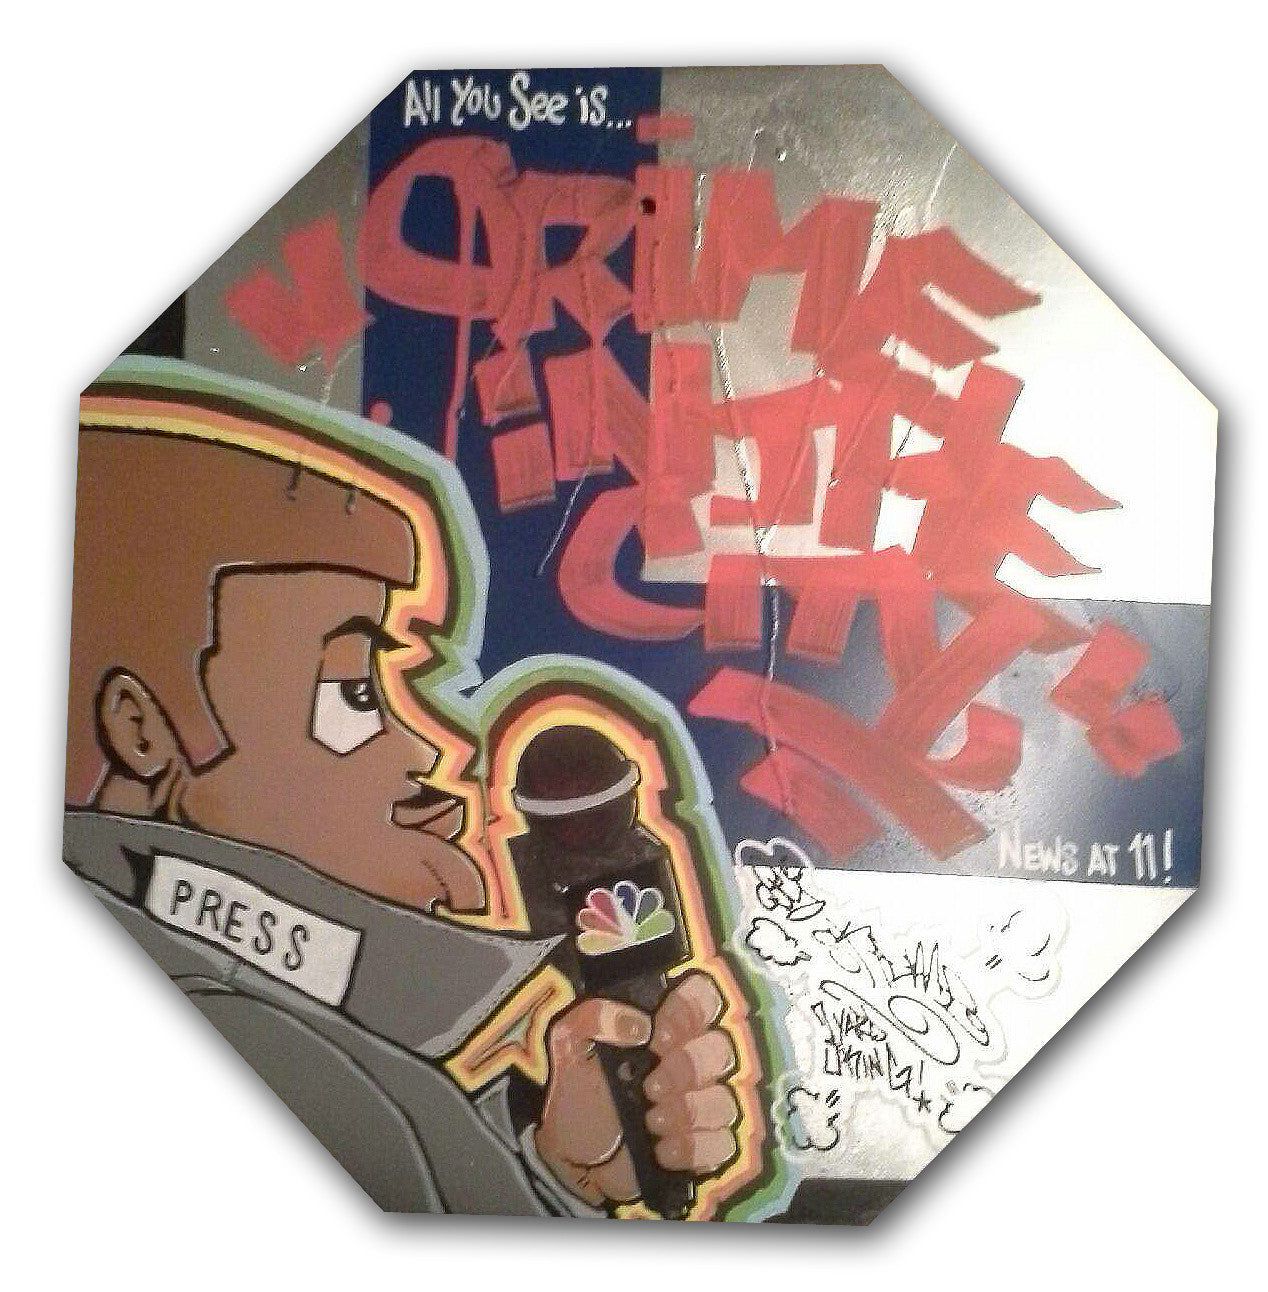 SKEME - "Crime In The City" Stop Sign